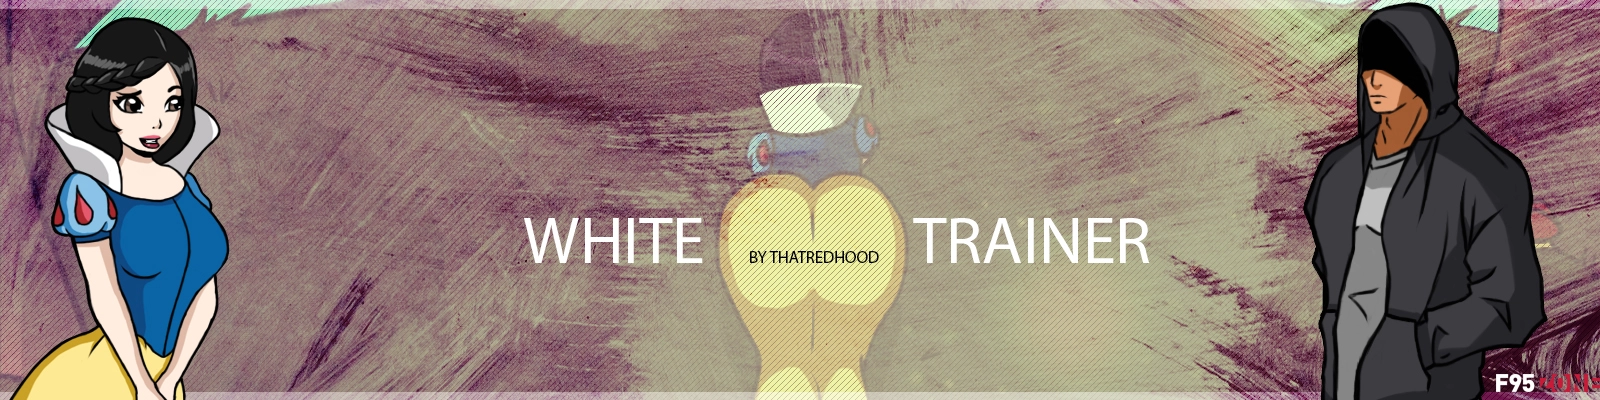 White Trainer [v1.0] main image